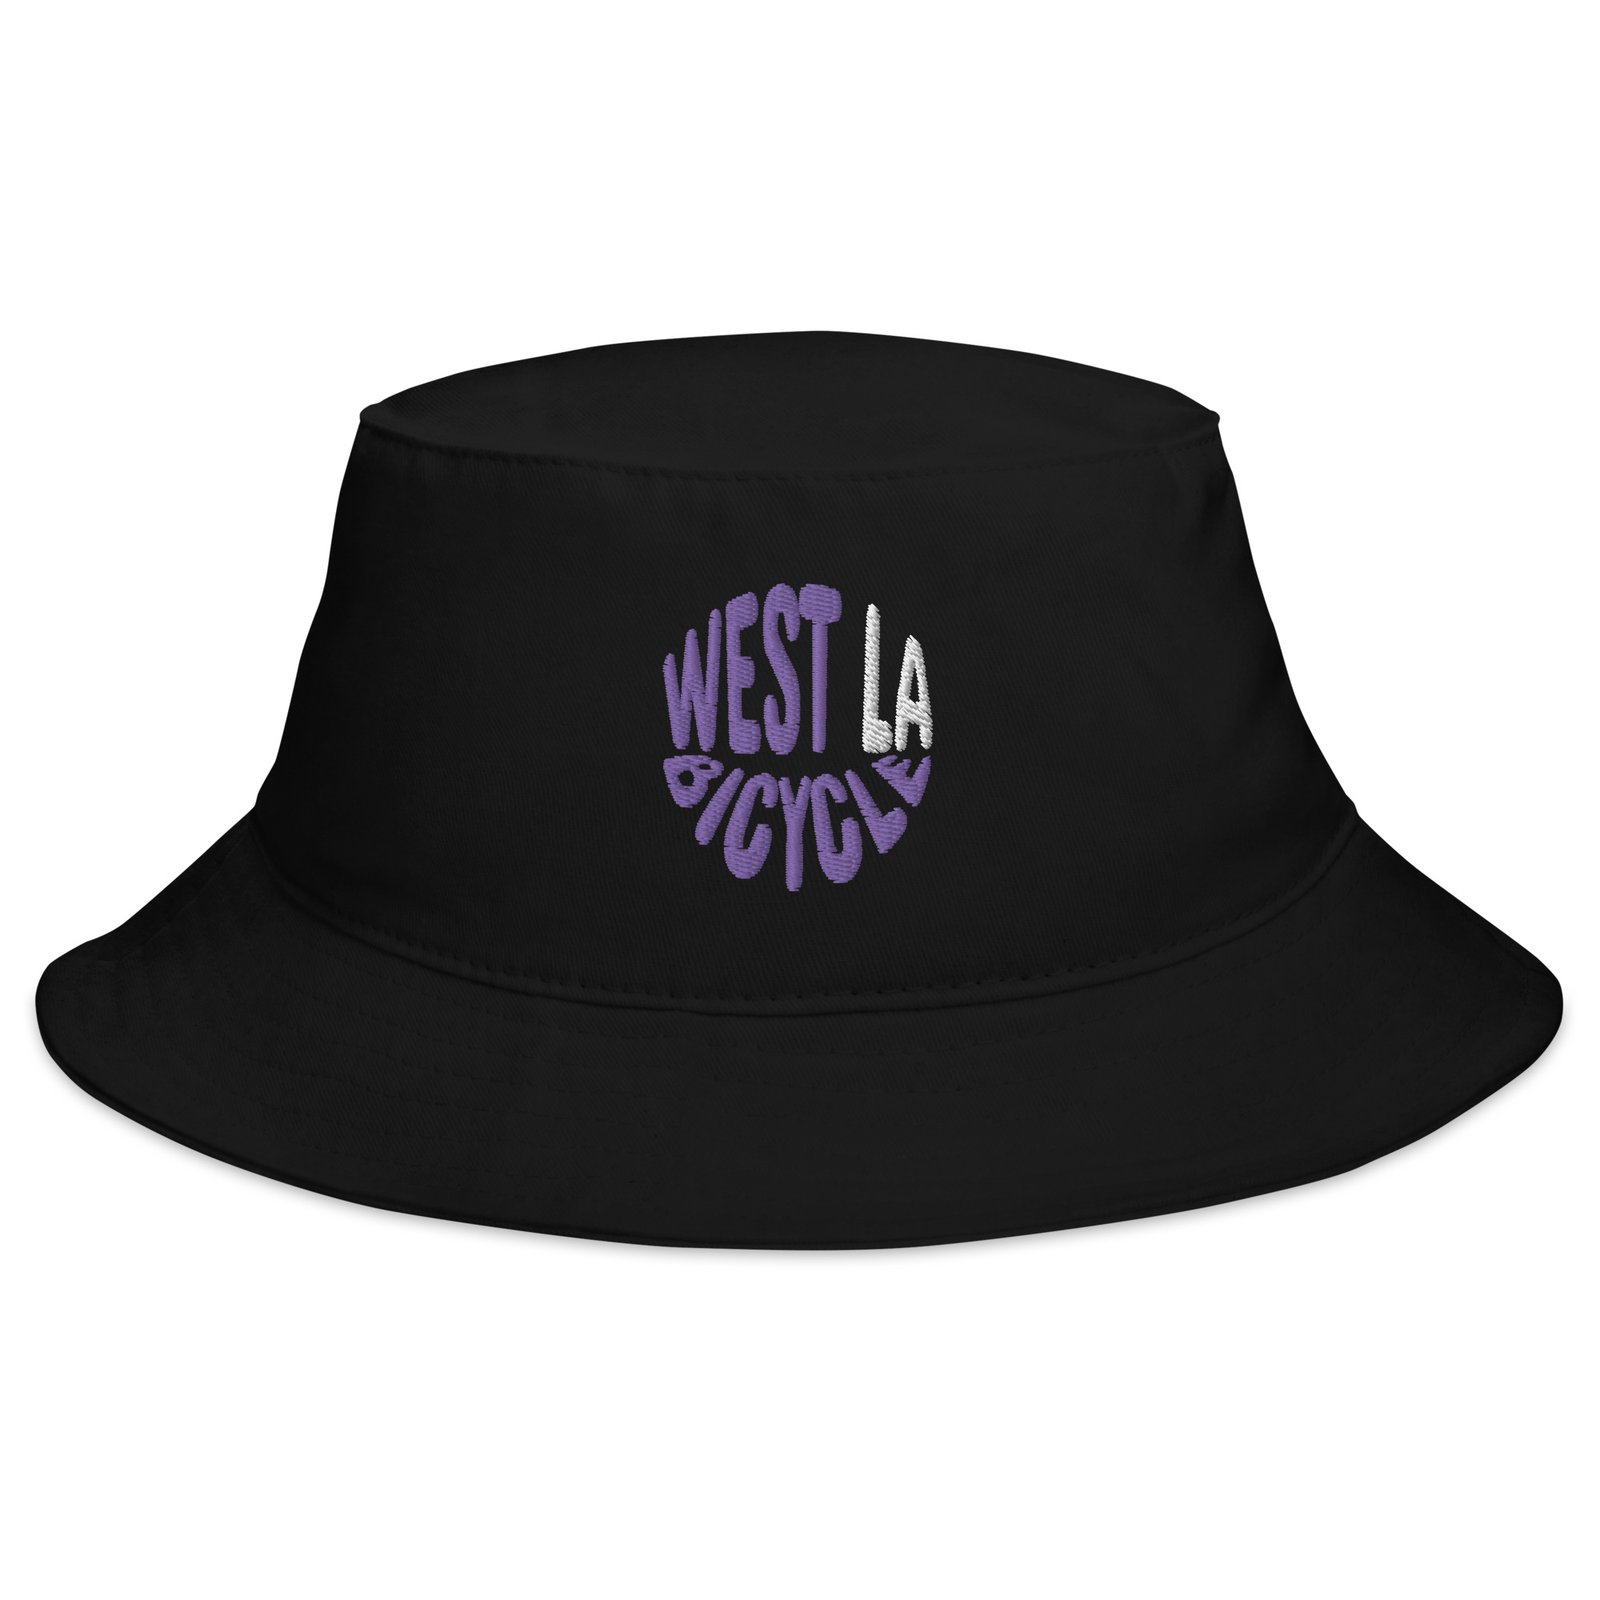 West LA Bicycle - Embroidered Bucket Hat